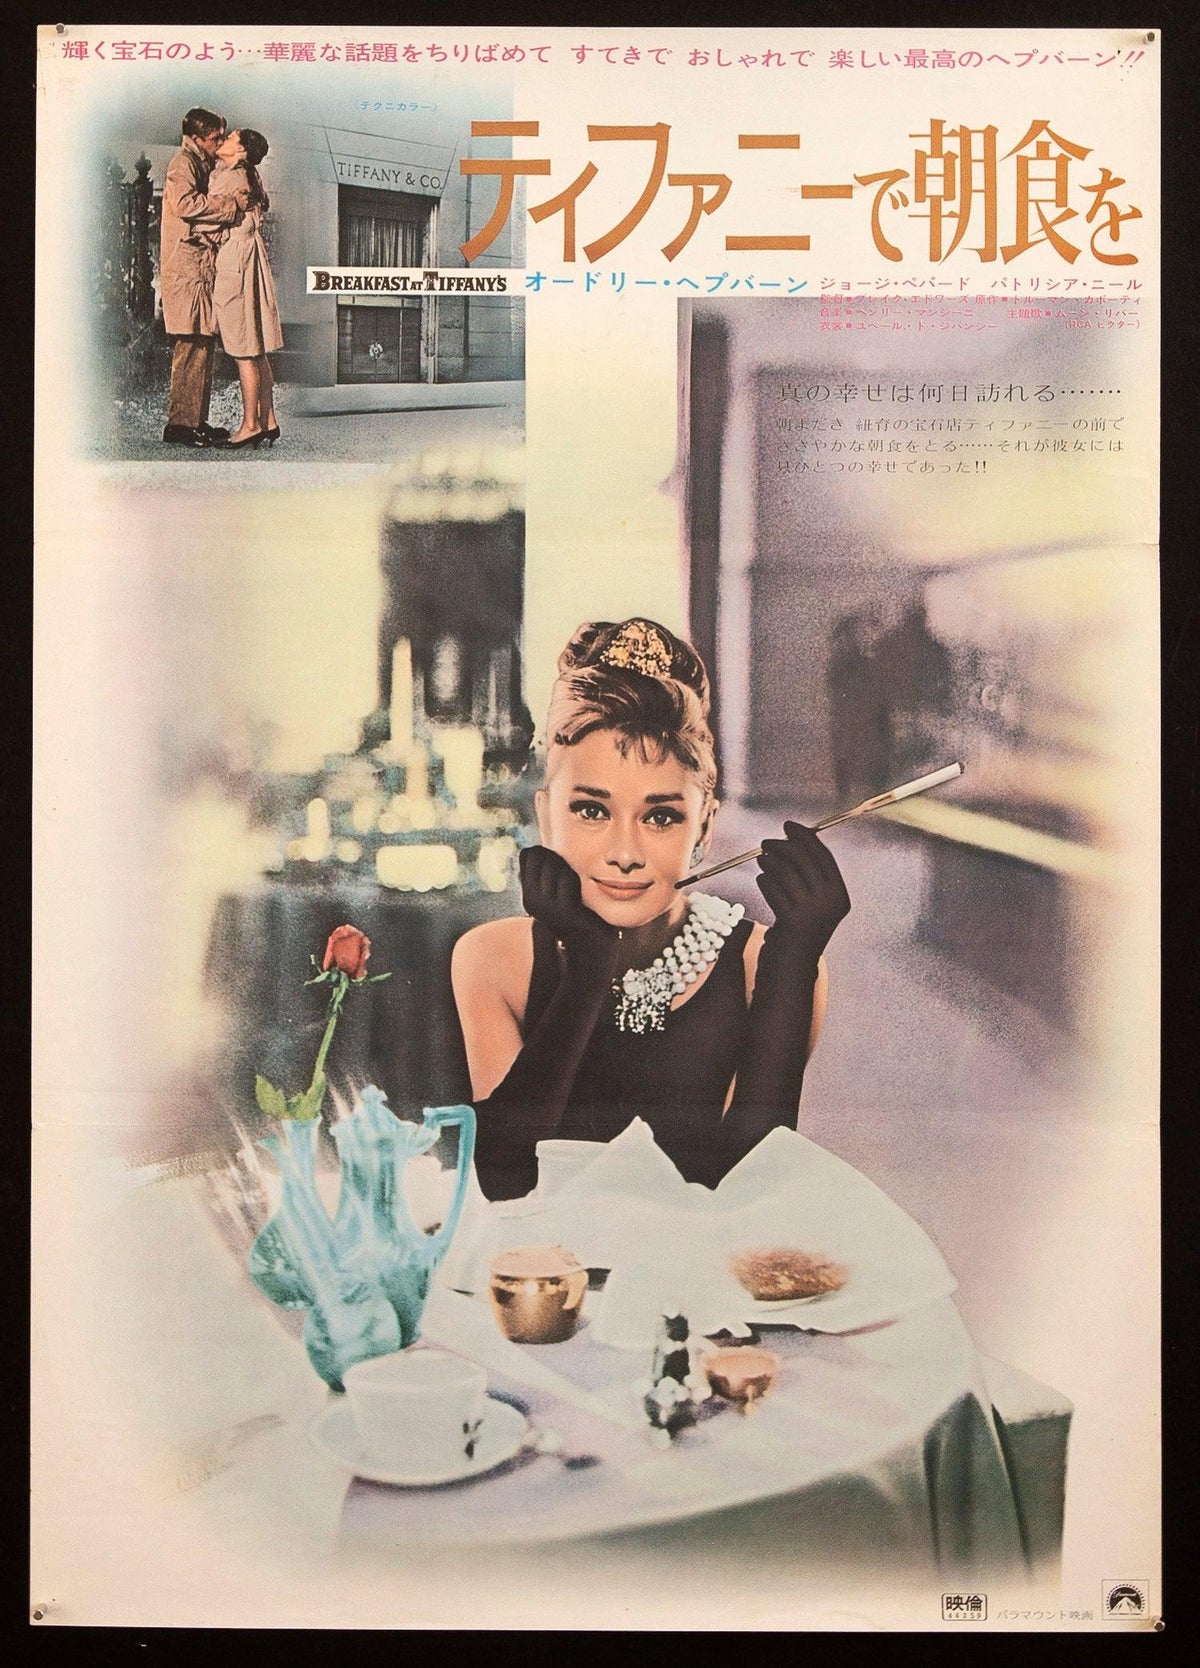 Breakfast at Tiffany&#39;s Japanese 1 panel (20x29) Original Vintage Movie Poster